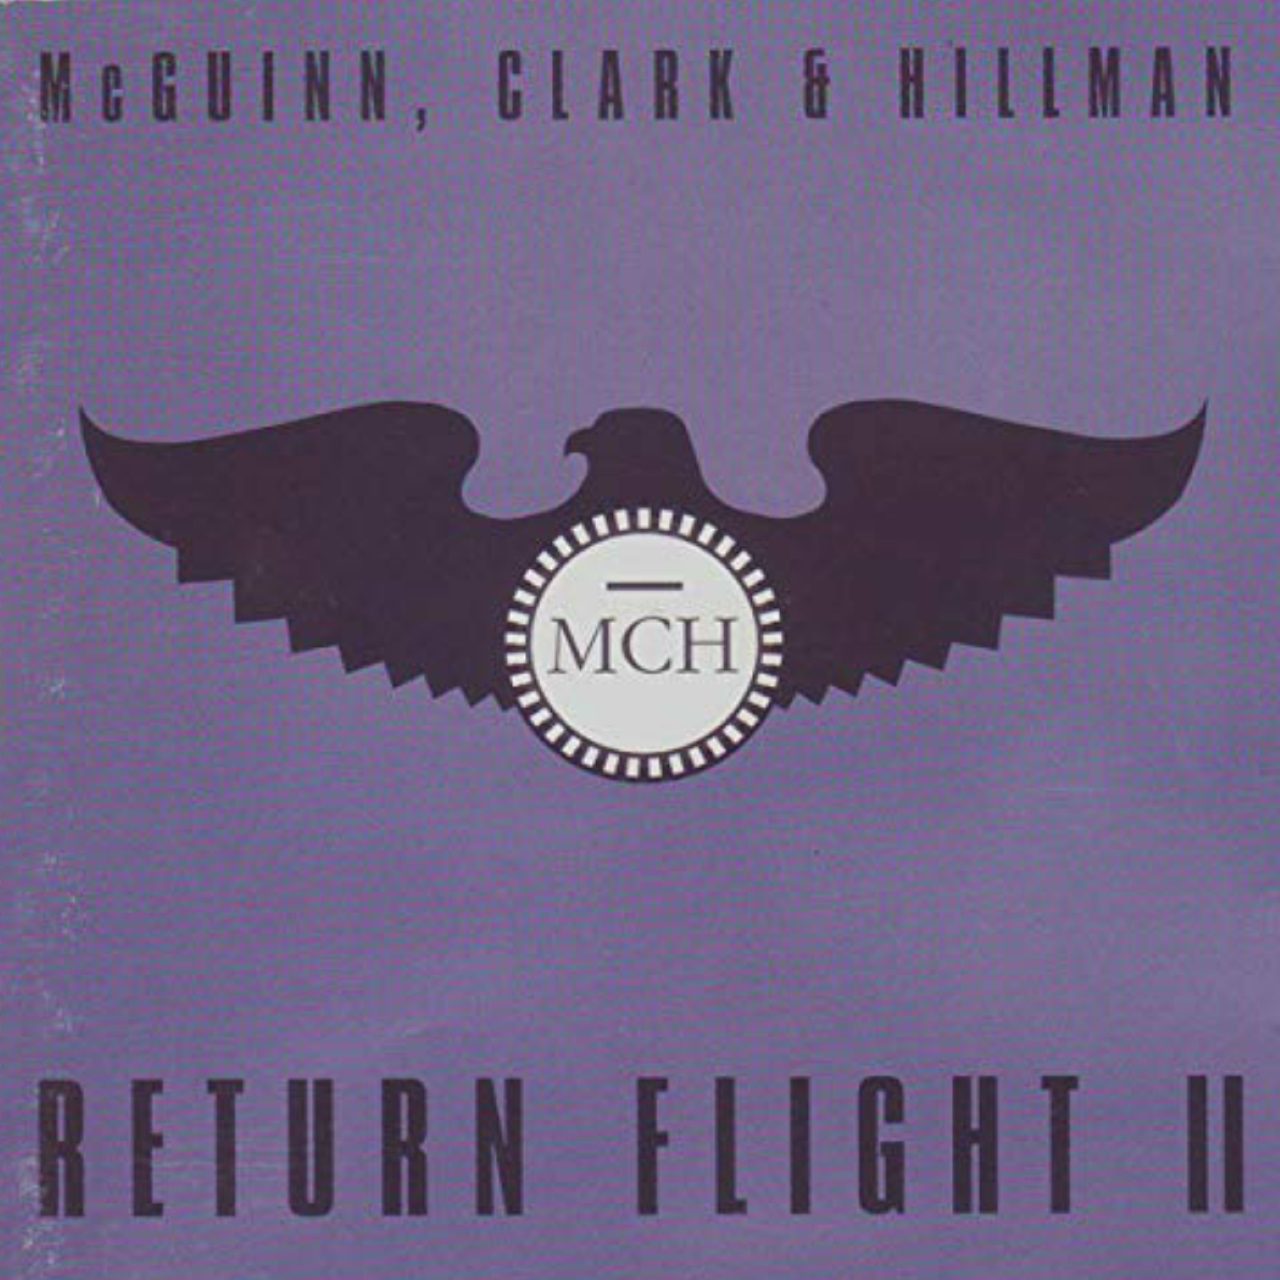 McGuinn, Clark & Hillman - Return Flight Vol. 2 cover album